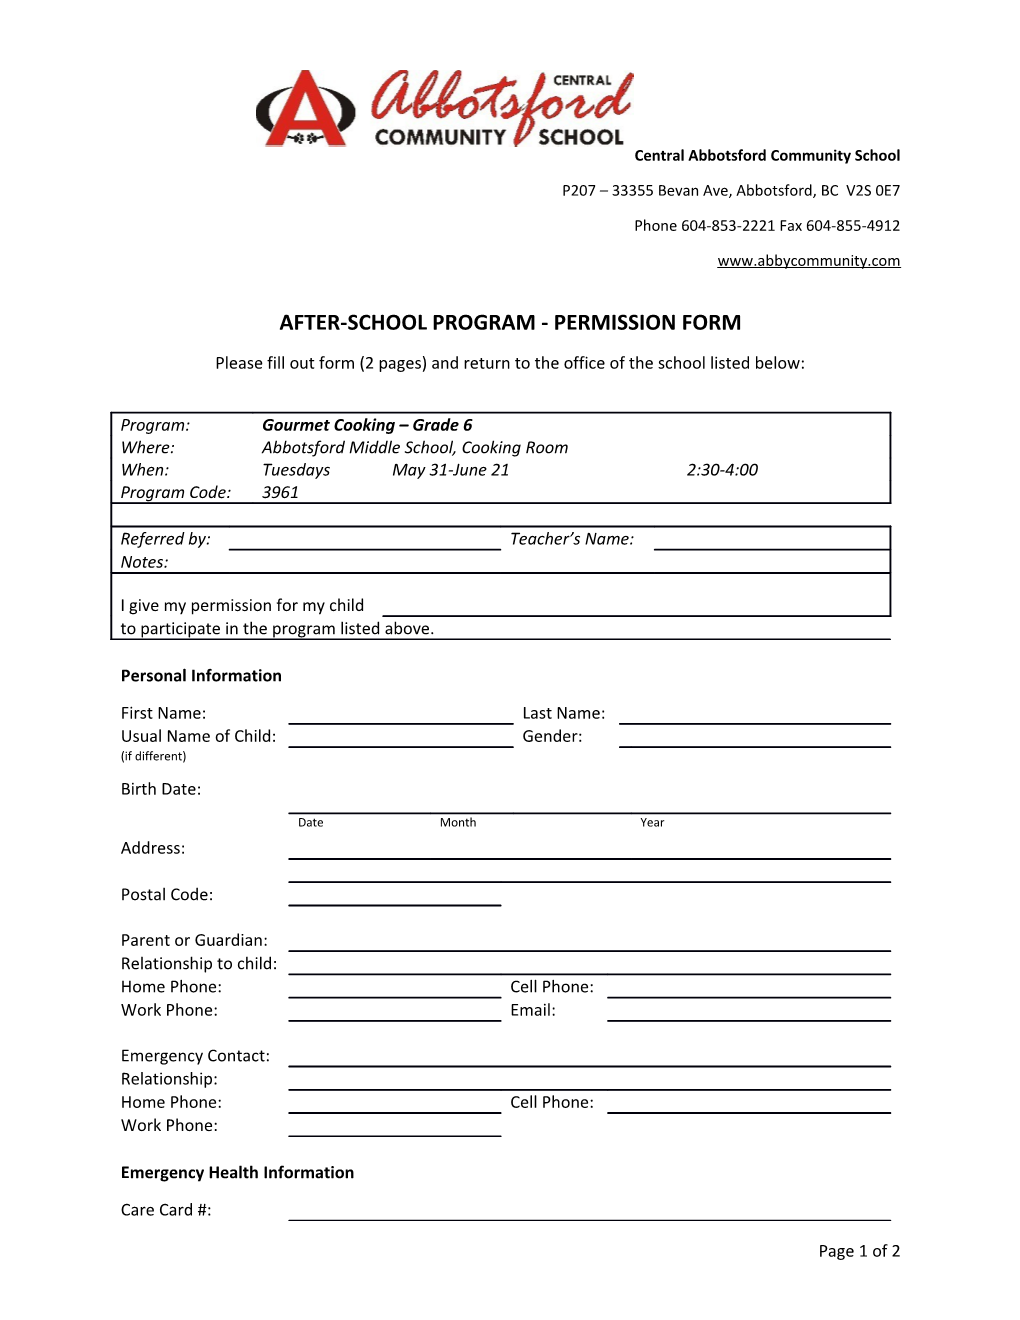 After-School Program - Permission Form